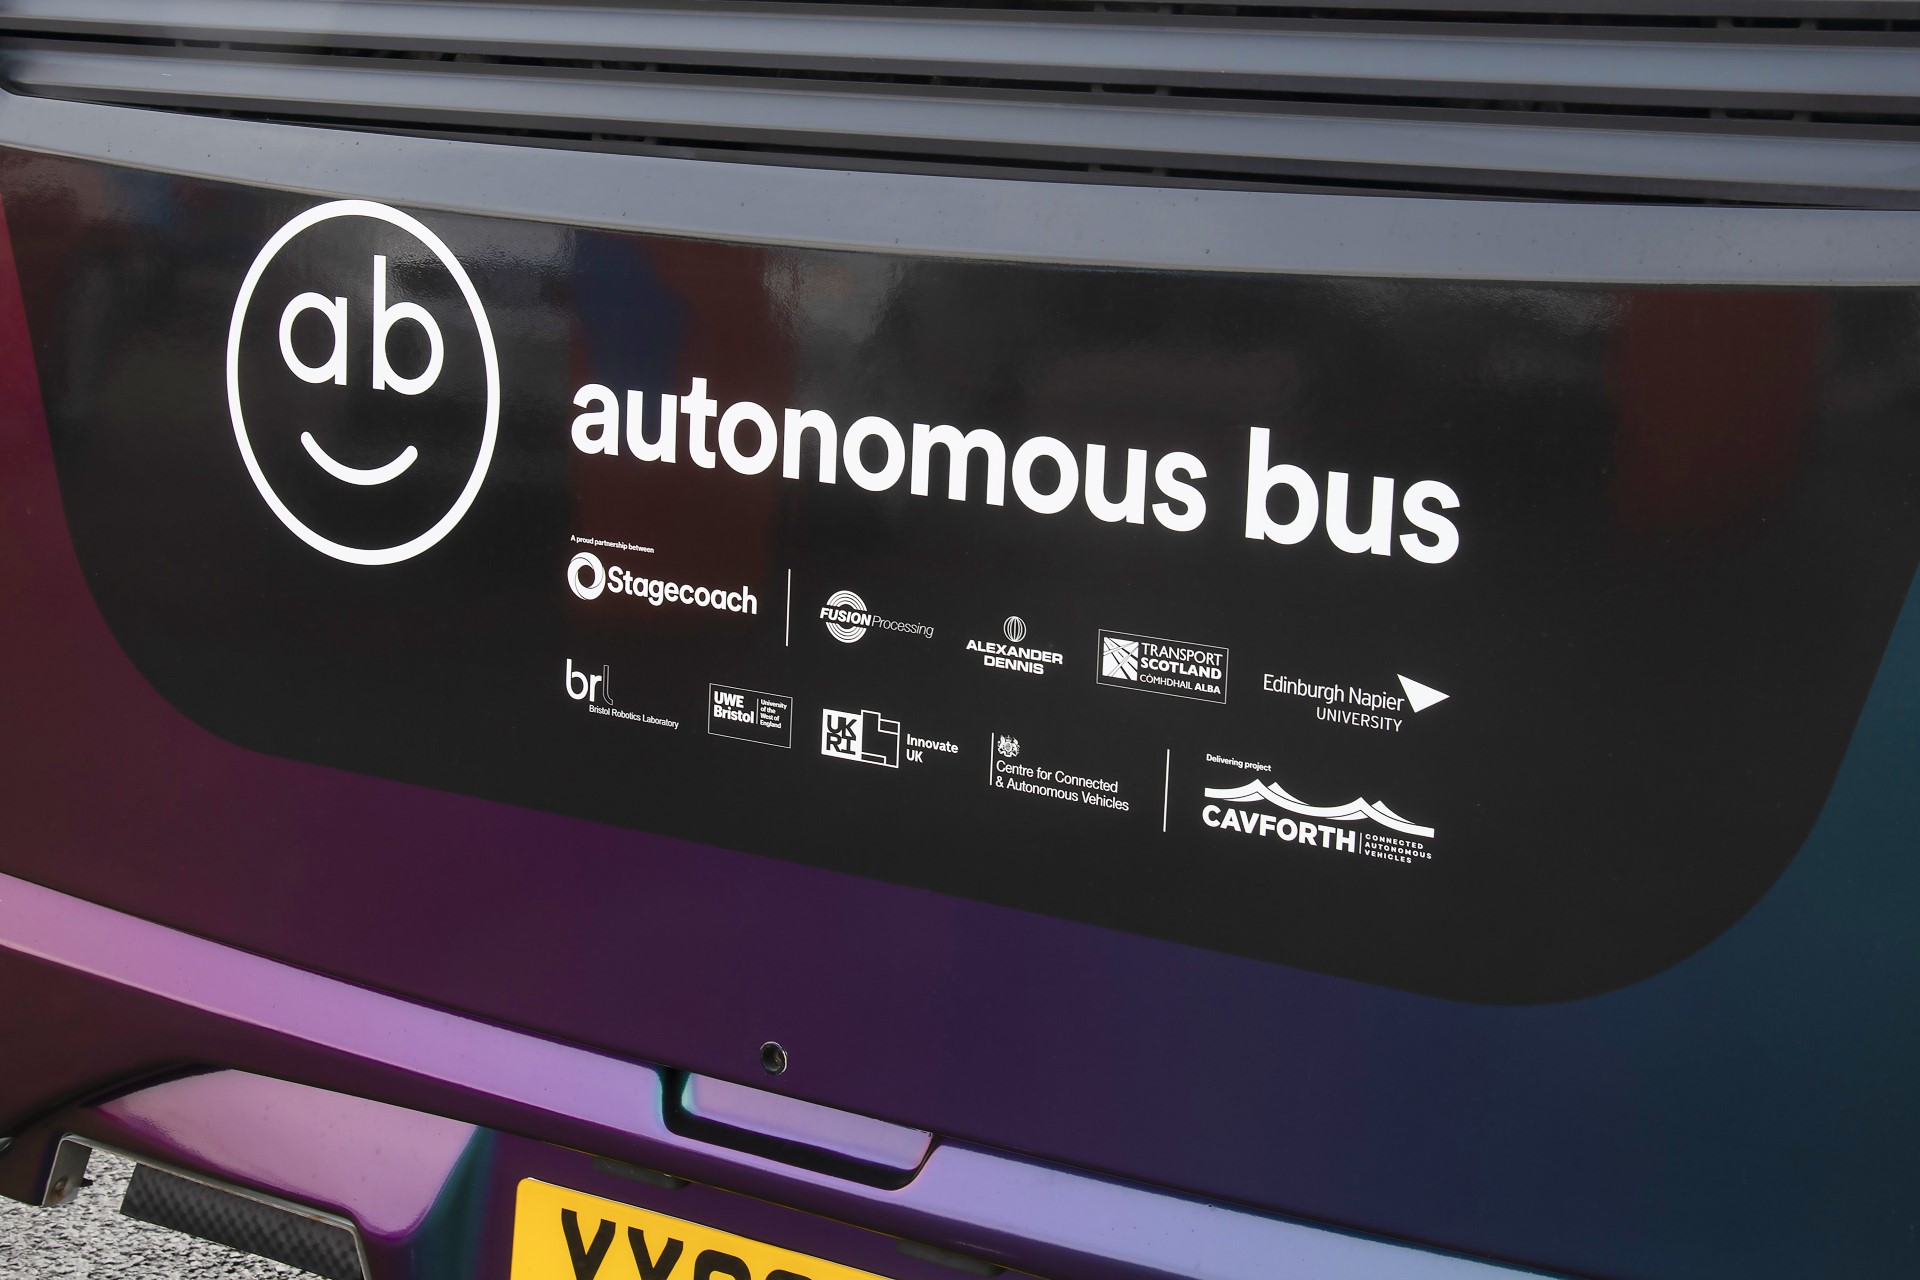 Autonomous buses could hit roads in £40m competition